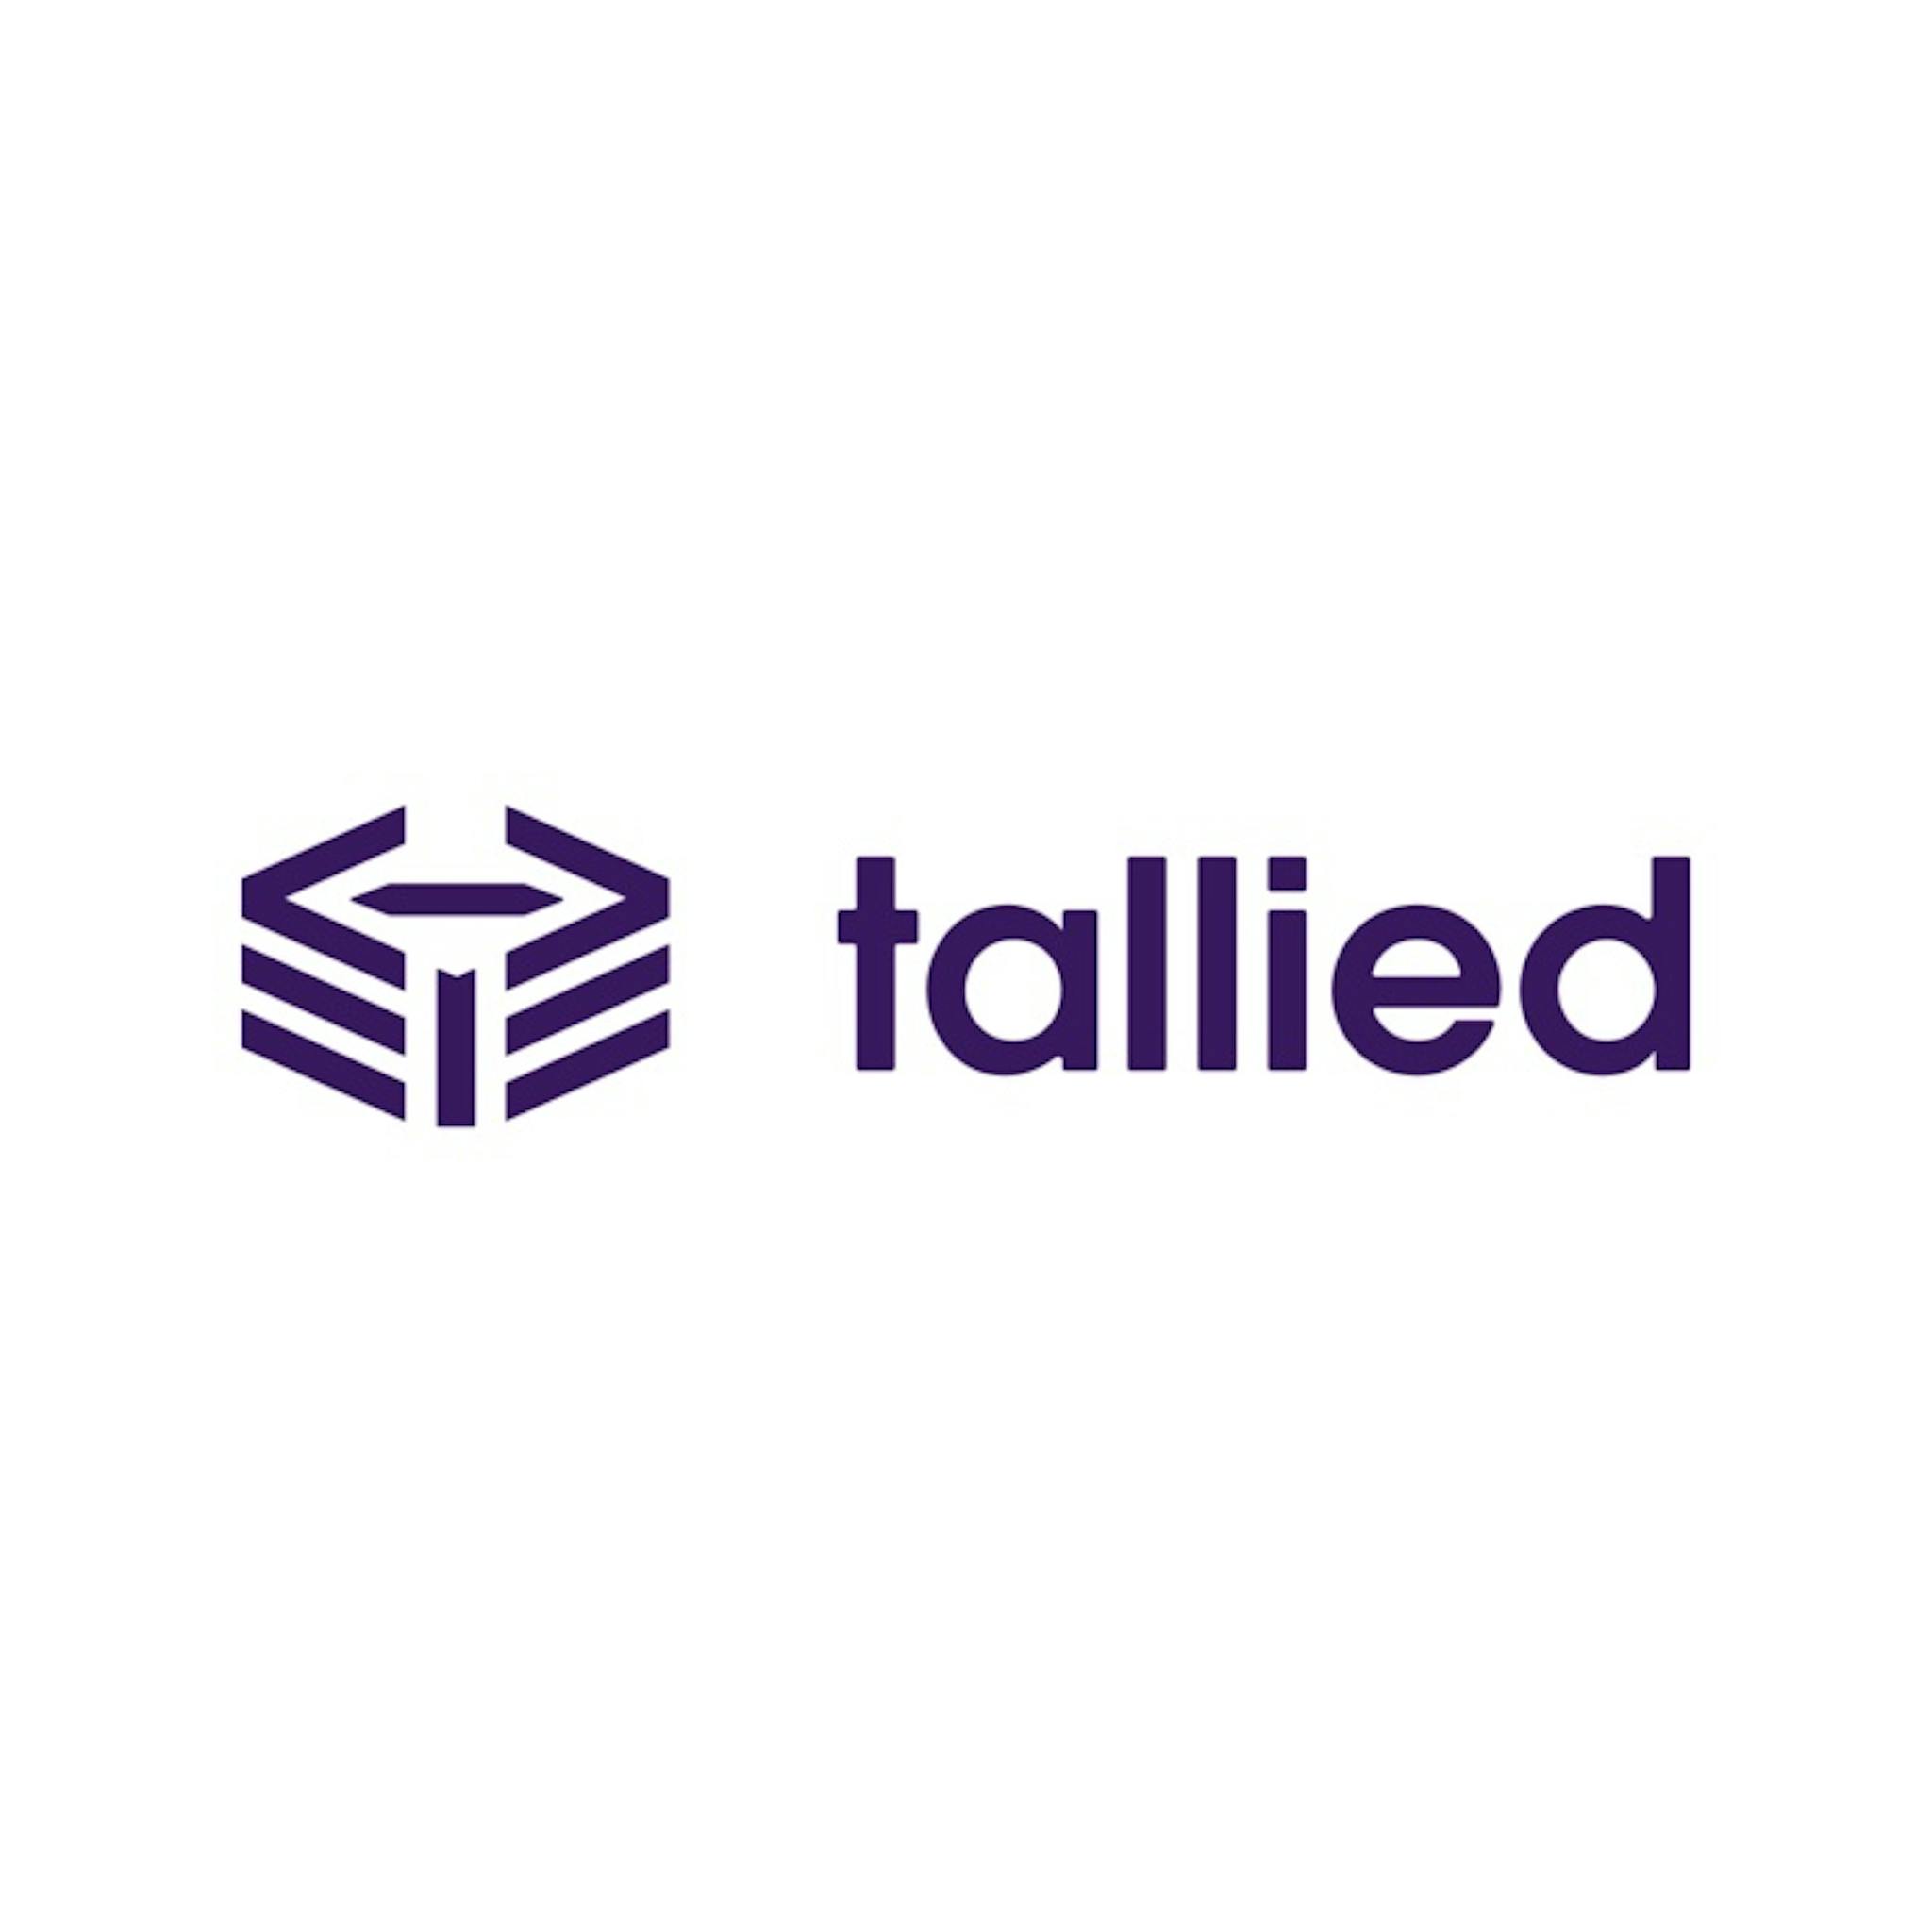 Tallied logo